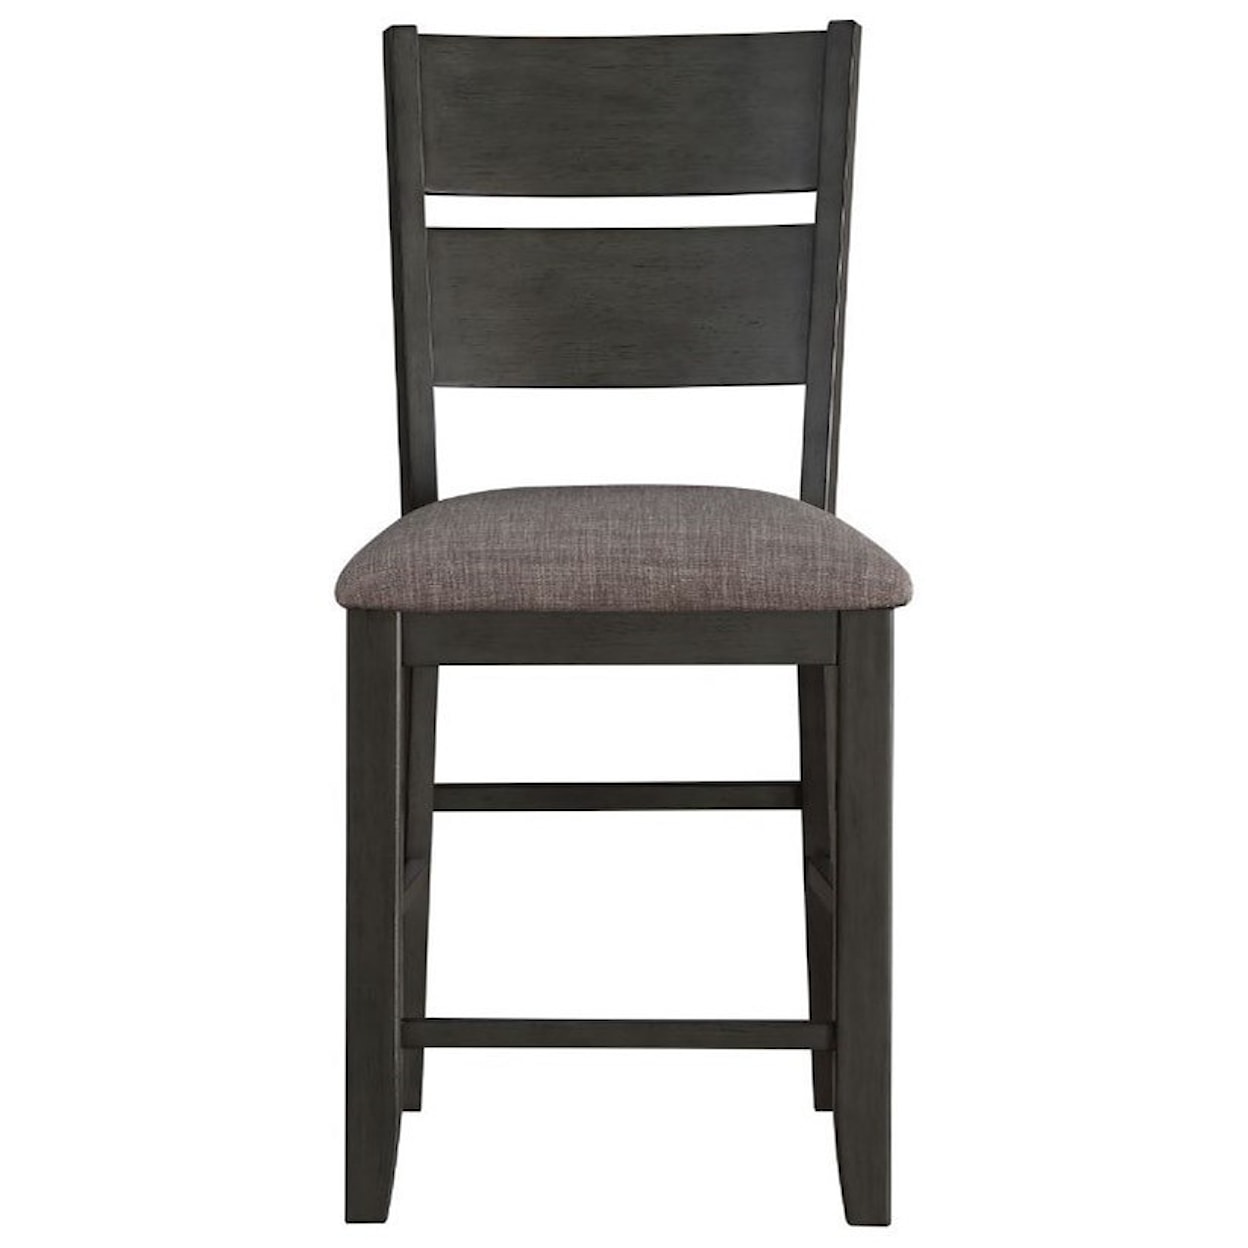 Homelegance Baresford Counter Height Chair